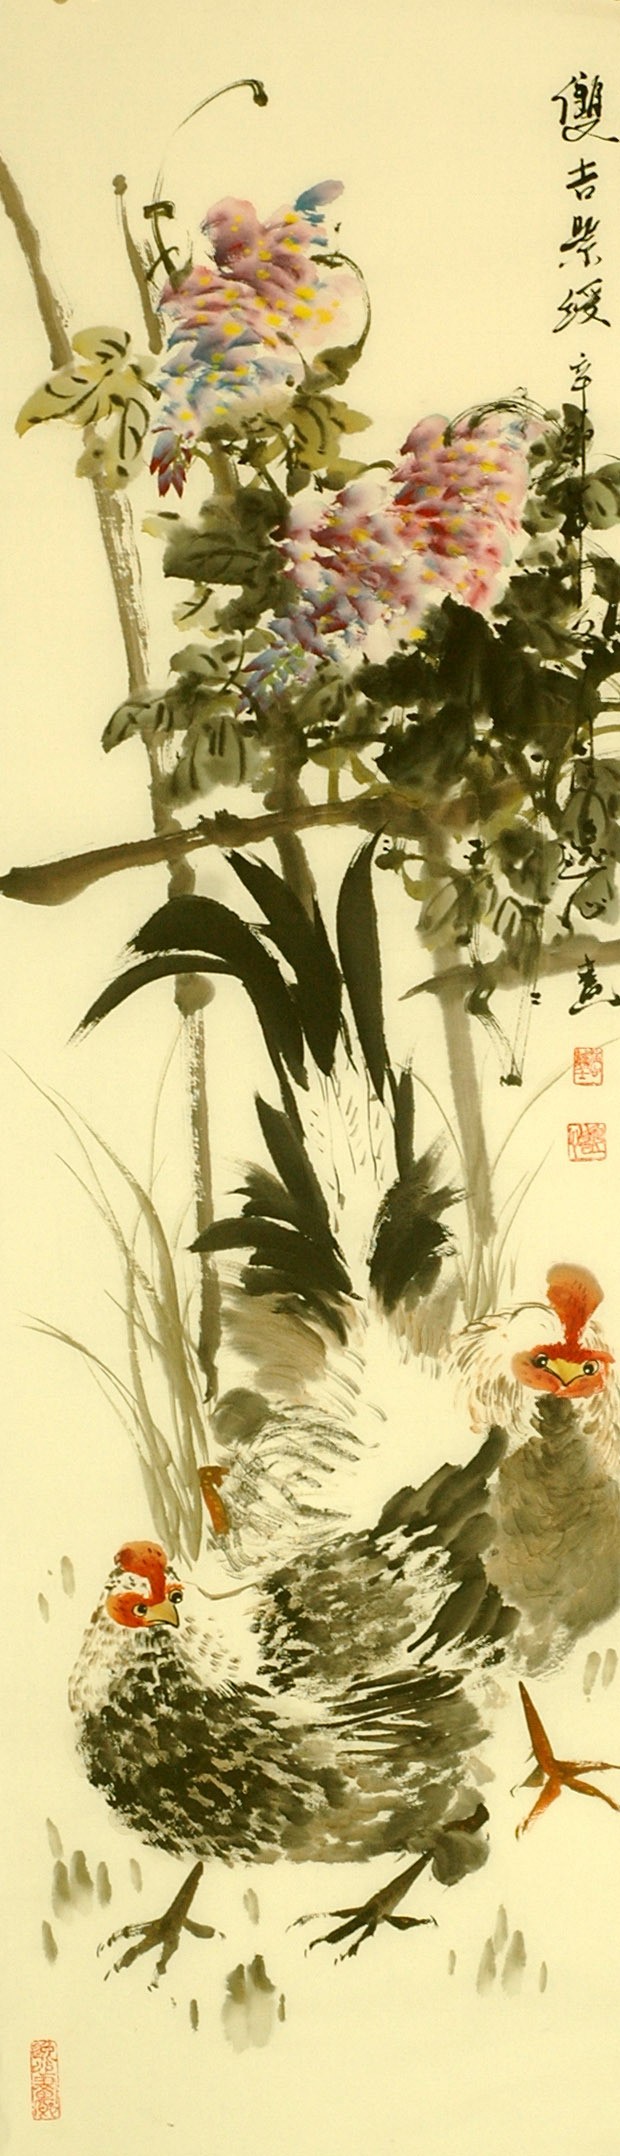 Chinese Peony Painting - CNAG007884